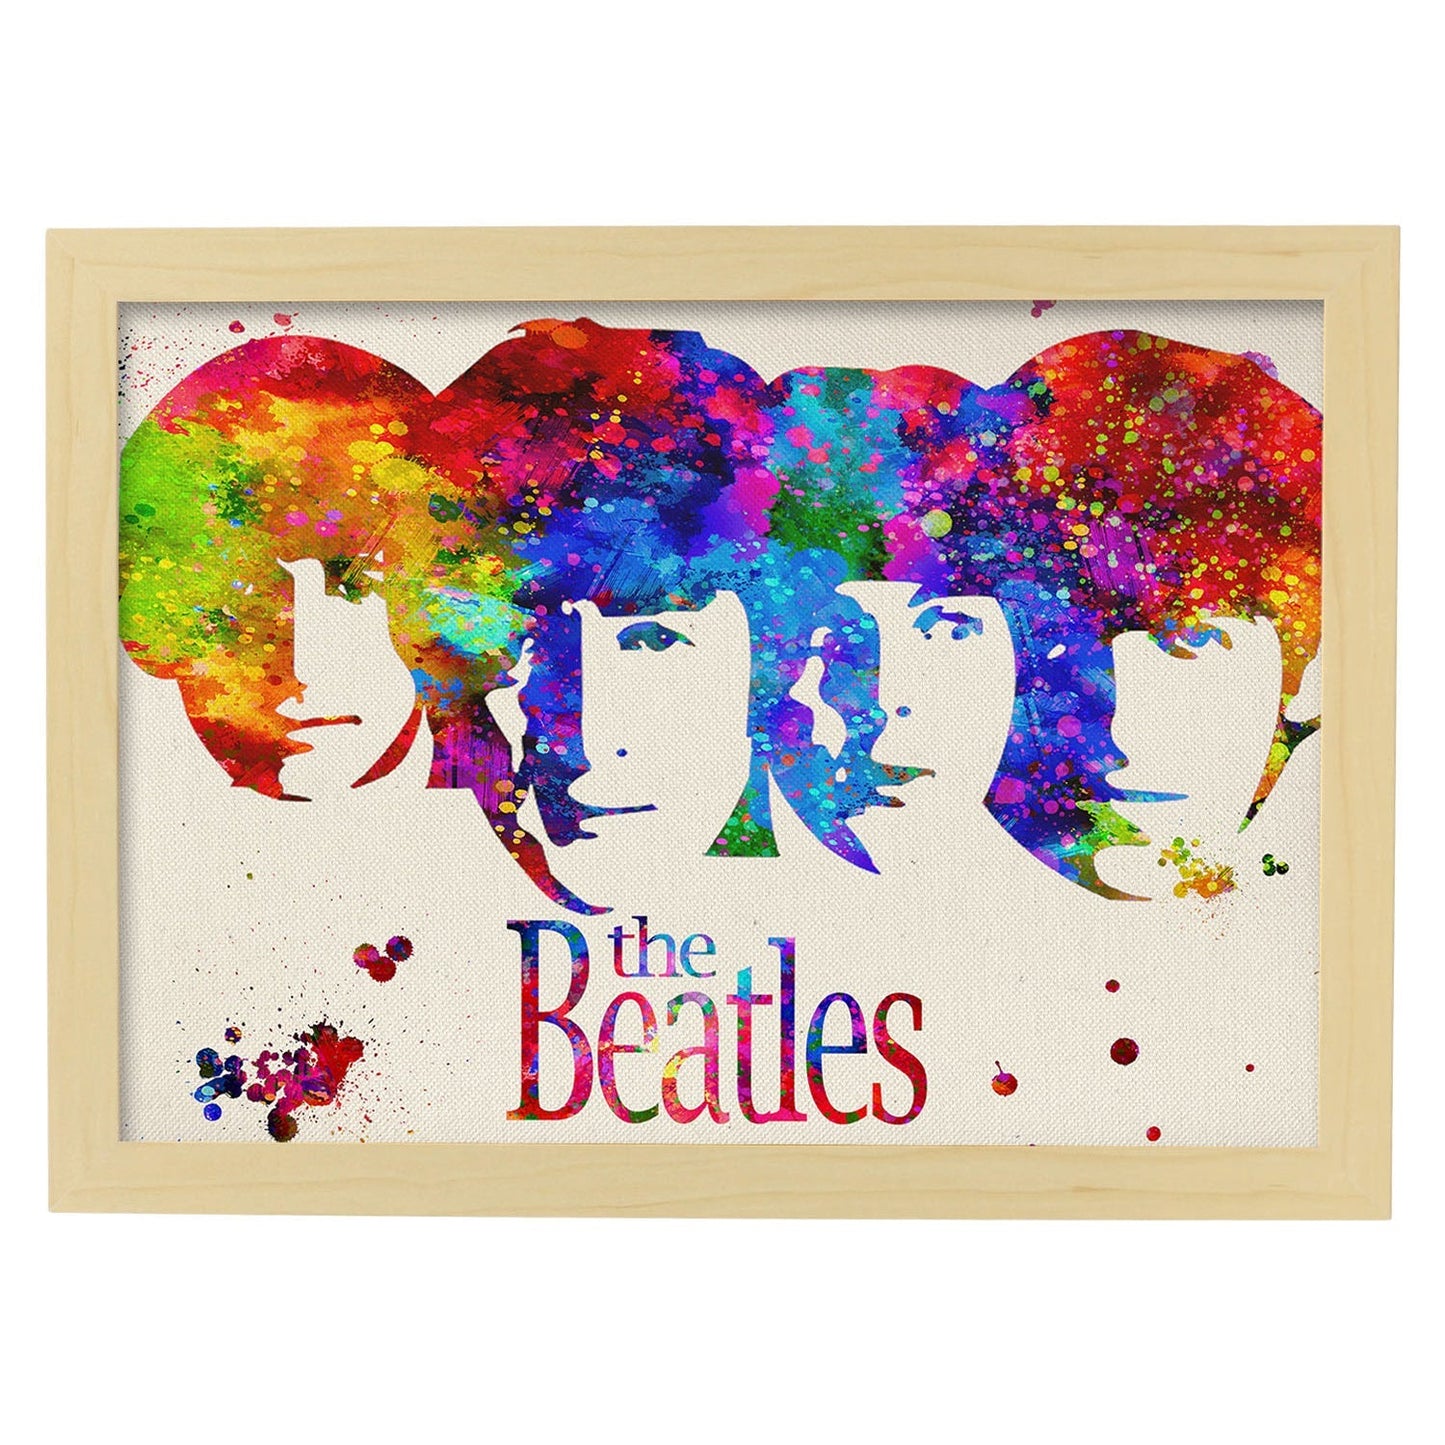 Lámina de la banda de música The Beatles (caras) en Poster estilo explosión de color . Papel 250 gr alta calidad.-Artwork-Nacnic-A3-Marco Madera clara-Nacnic Estudio SL